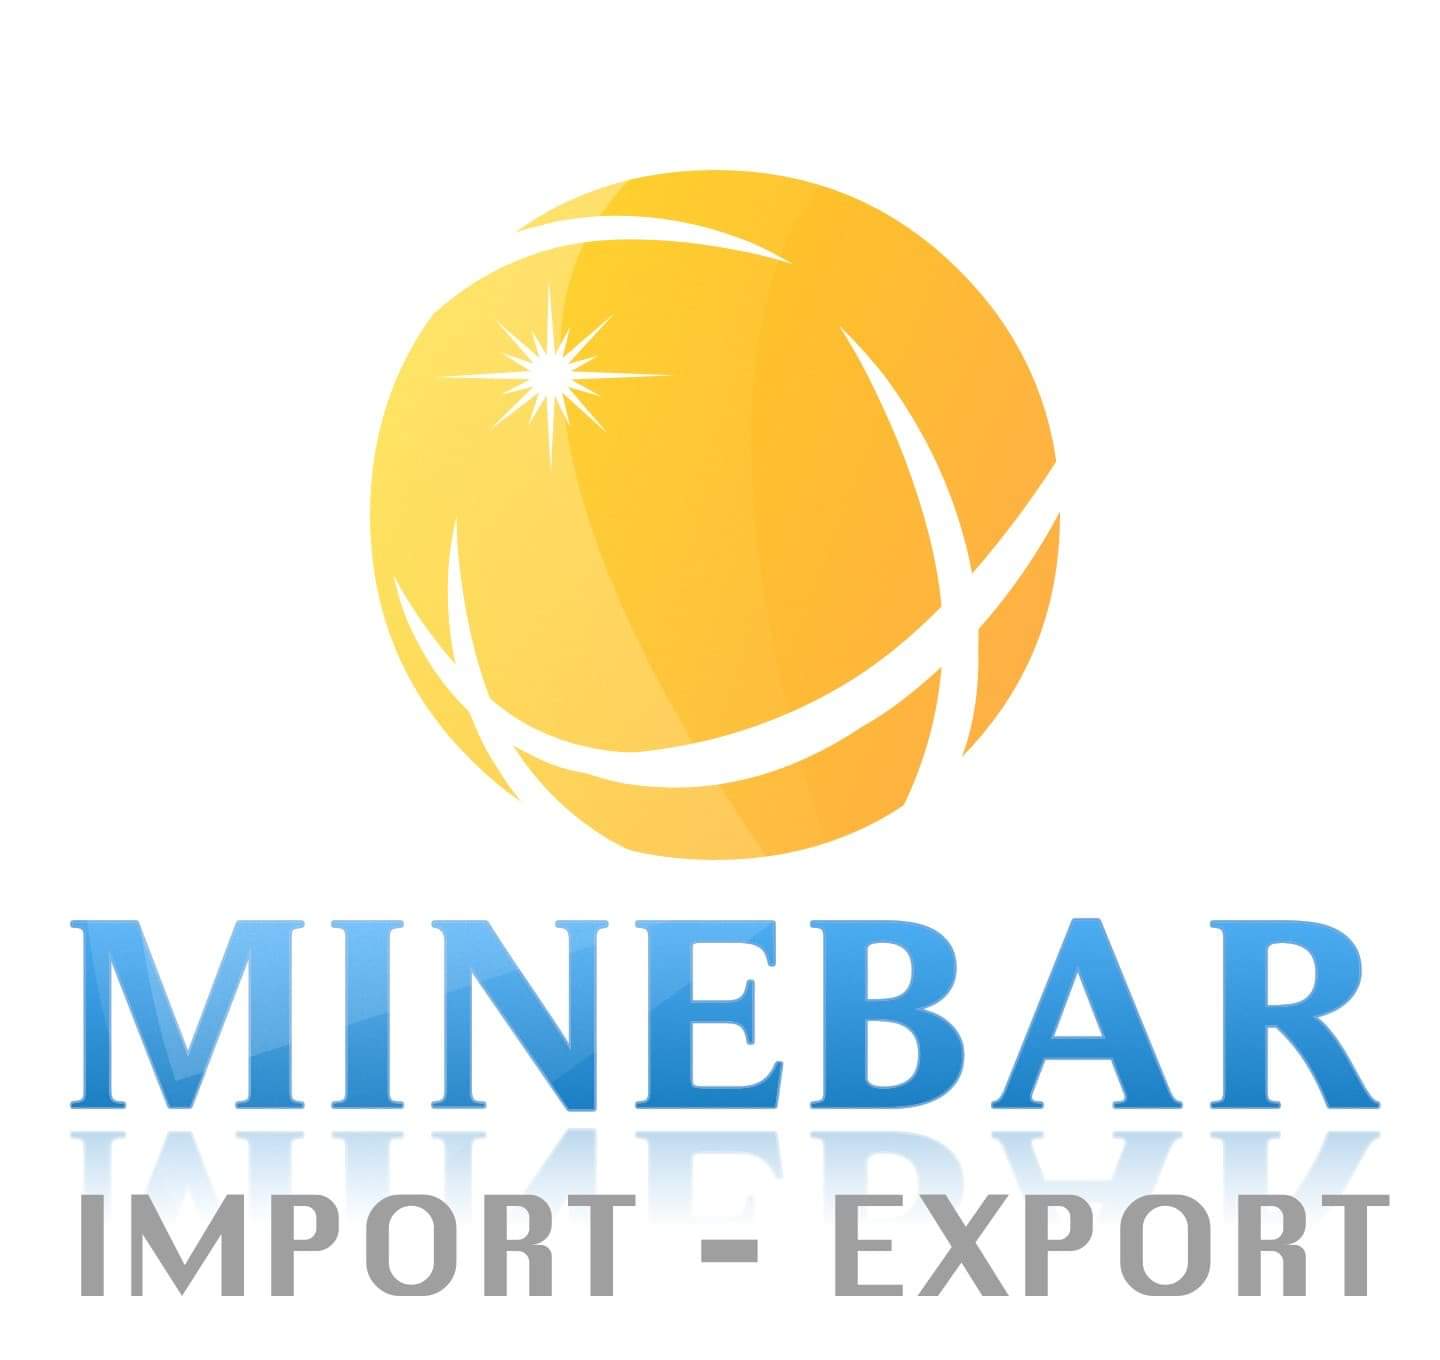 MINEBAR IMPORT EXPORT